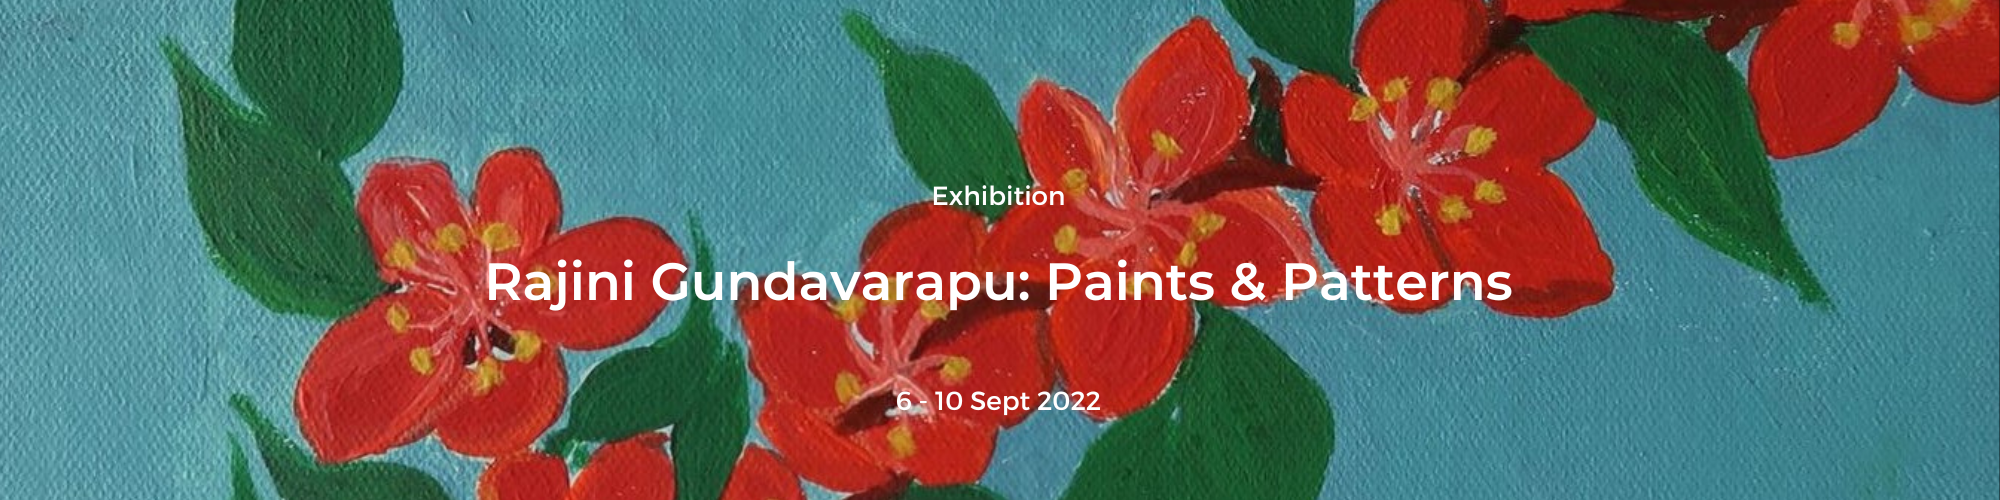 Rajini Gundavarapu: Paints & Patterns